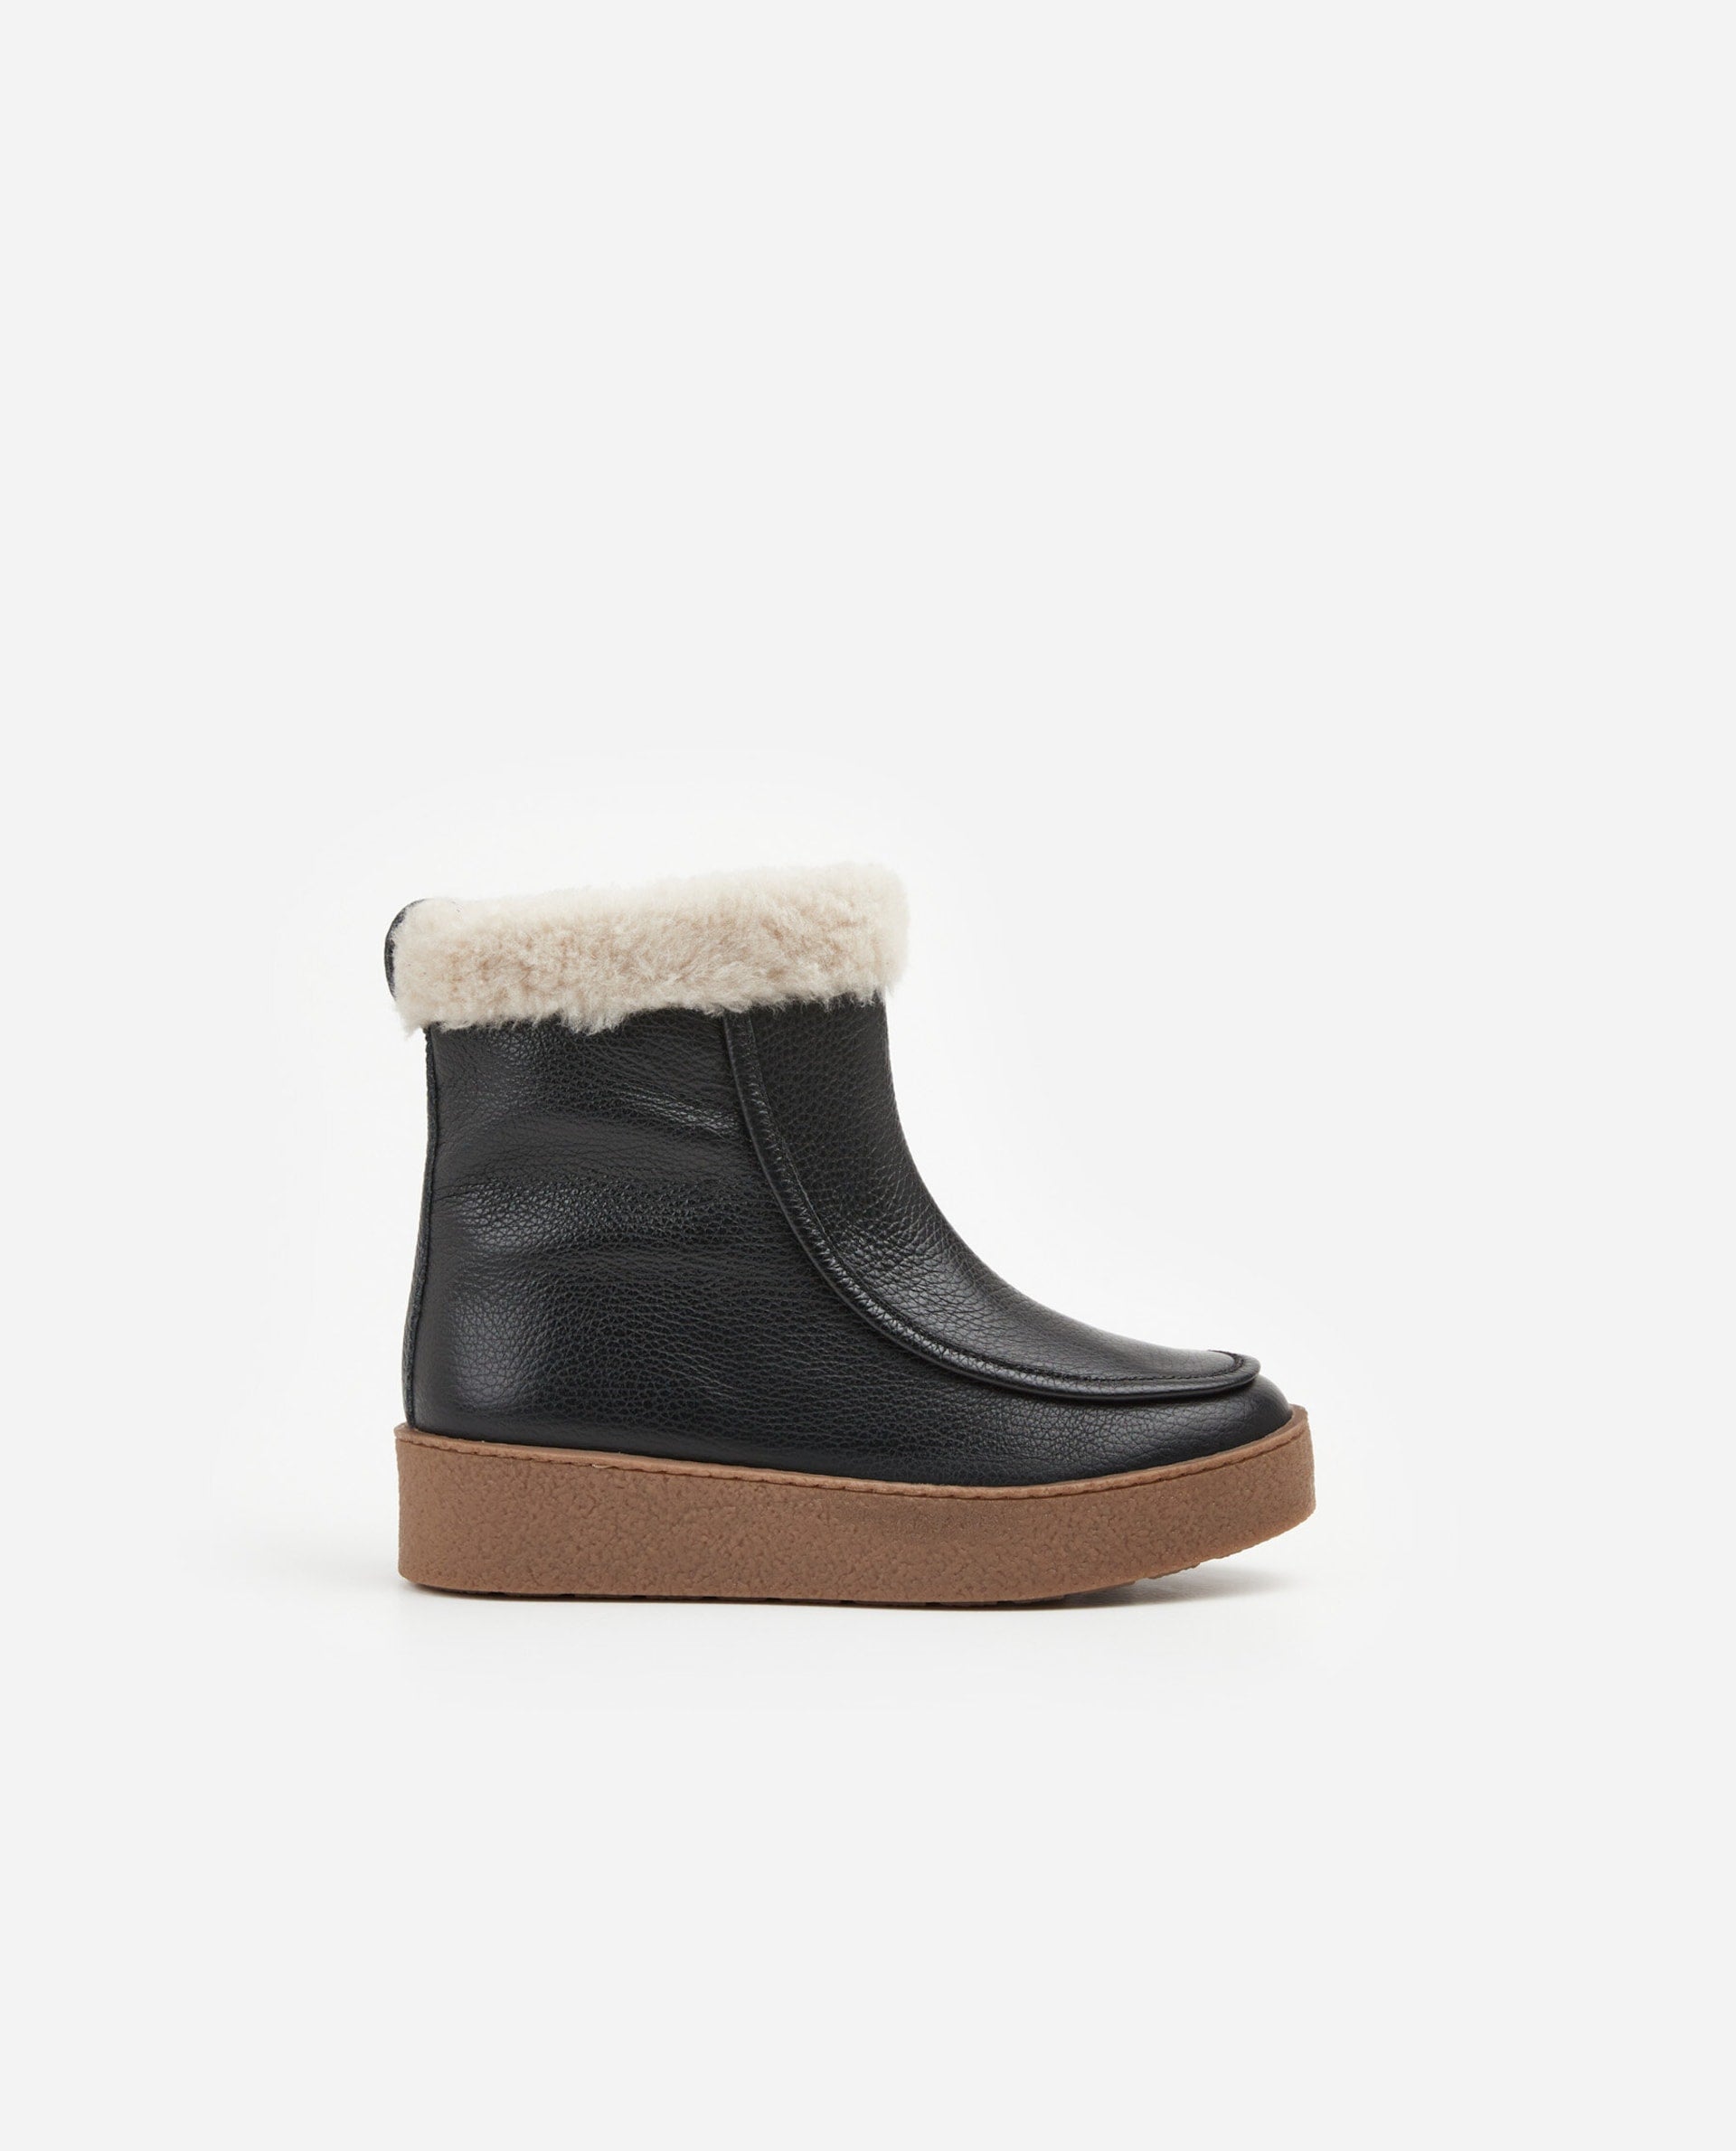 Simone Black Leather Winter Boots 22020923601-001 -8